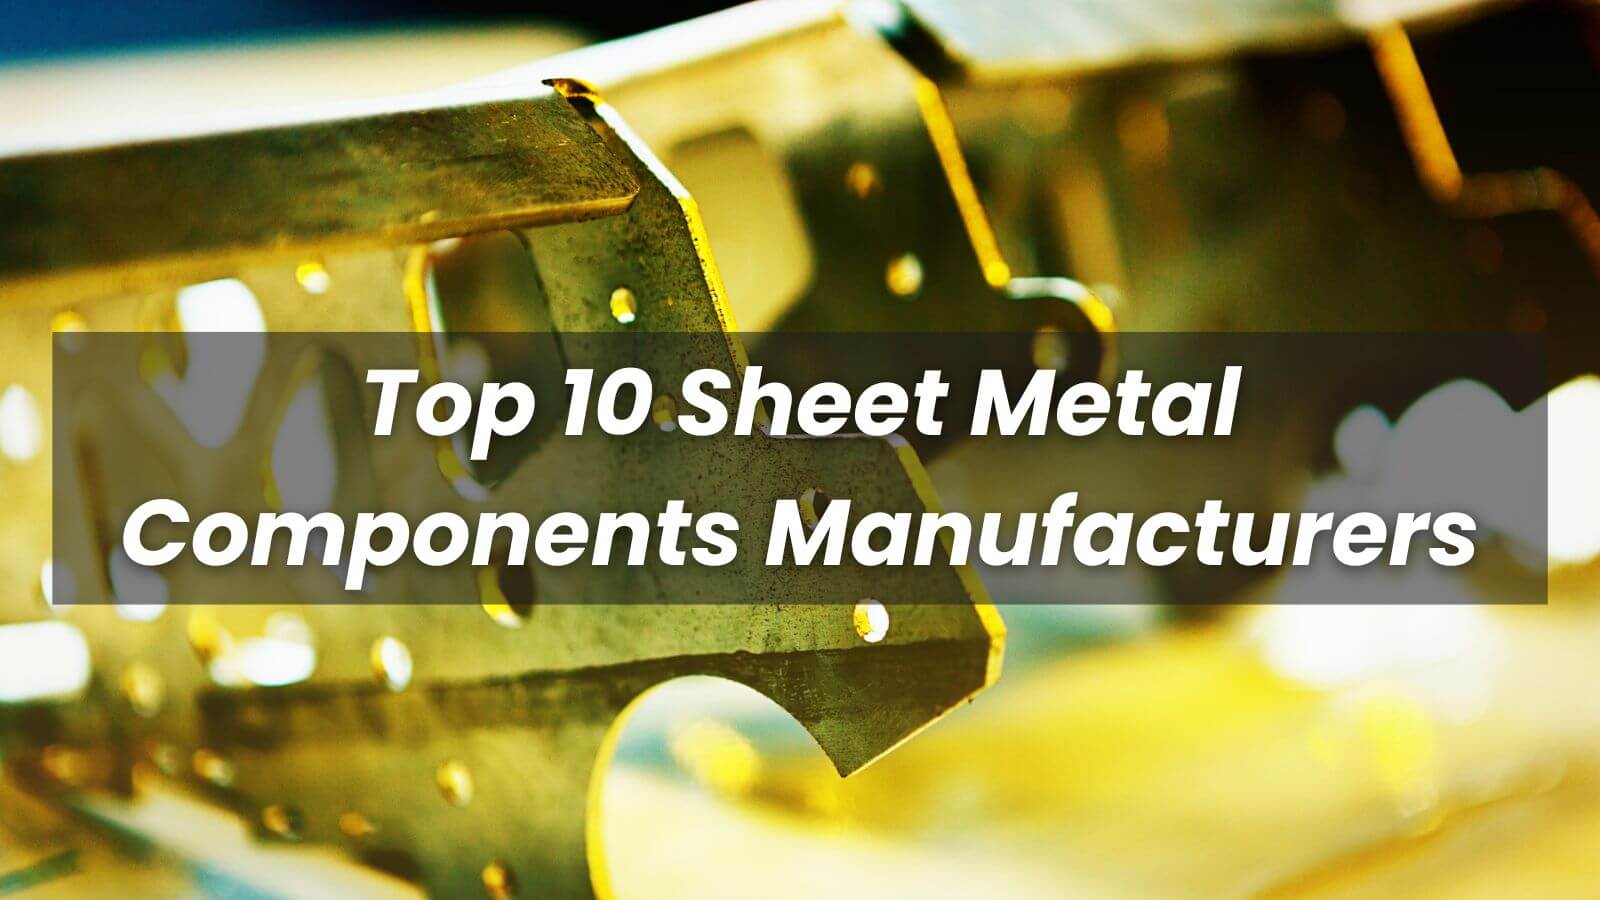 Top 10 Sheet Metal Components Manufacturers